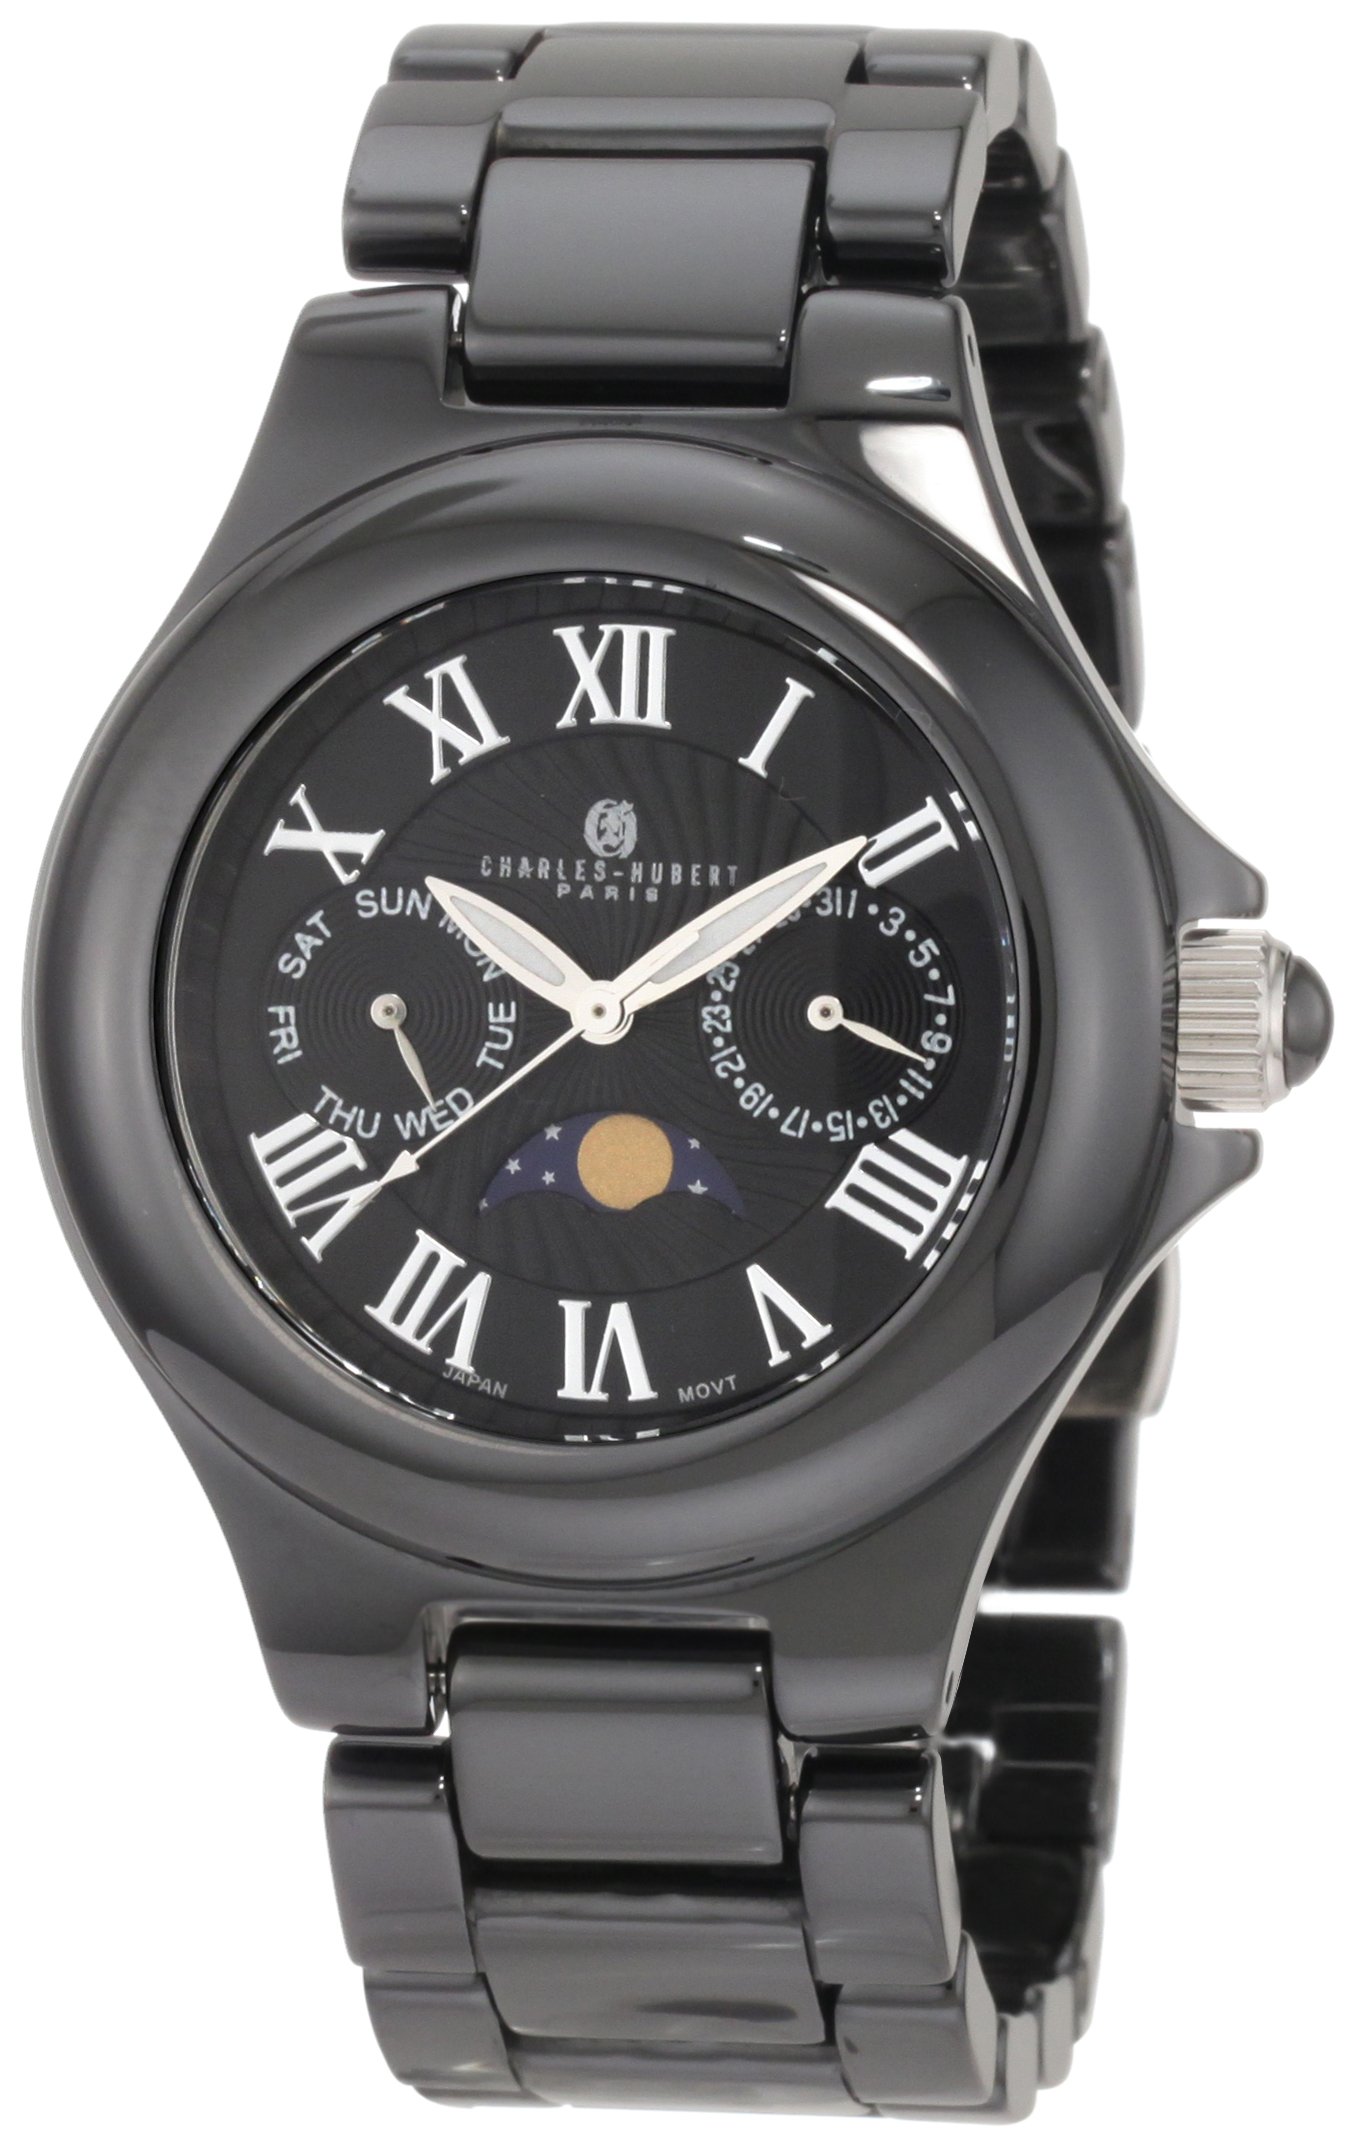 Charles-Hubert, Paris Men's 3872-B Premium Collection Black Ceramic Watch